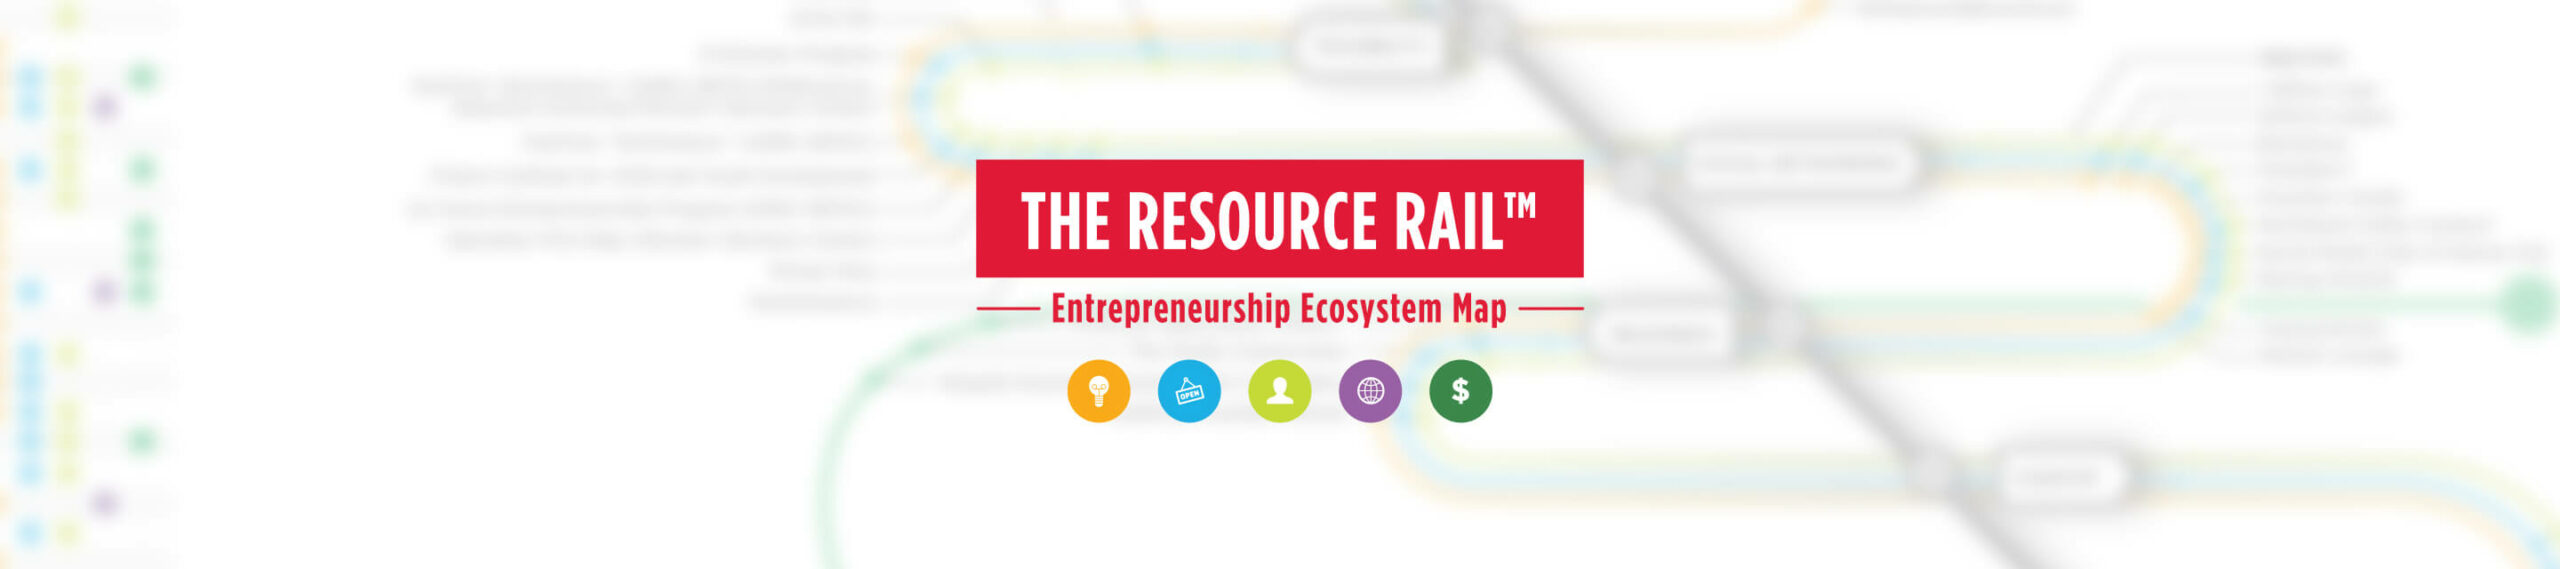 resource rail landing page header